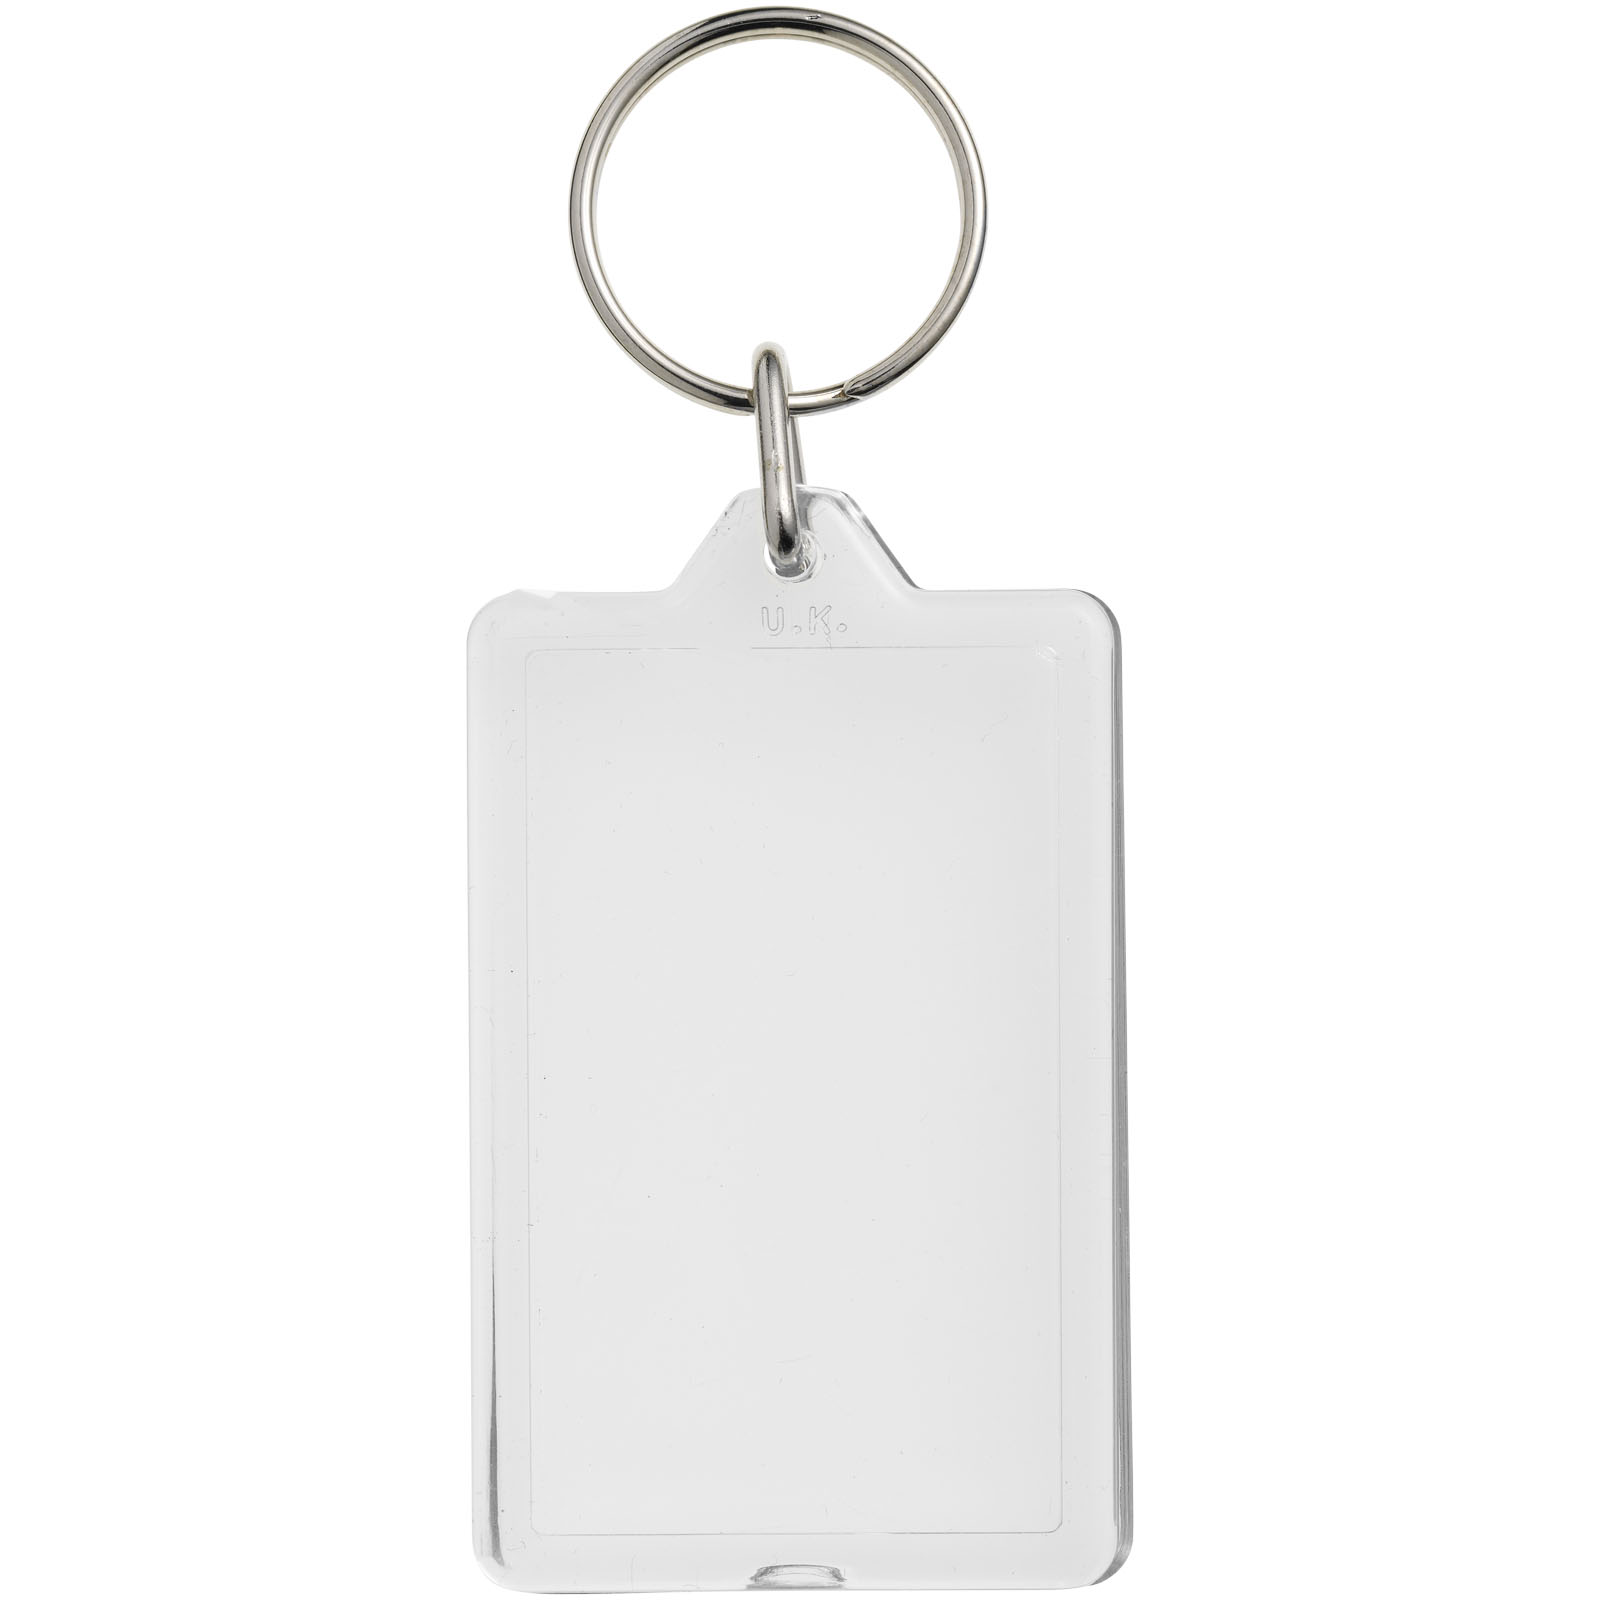 Advertising Keychains & Keyrings - Luken G1 reopenable keychain - 1